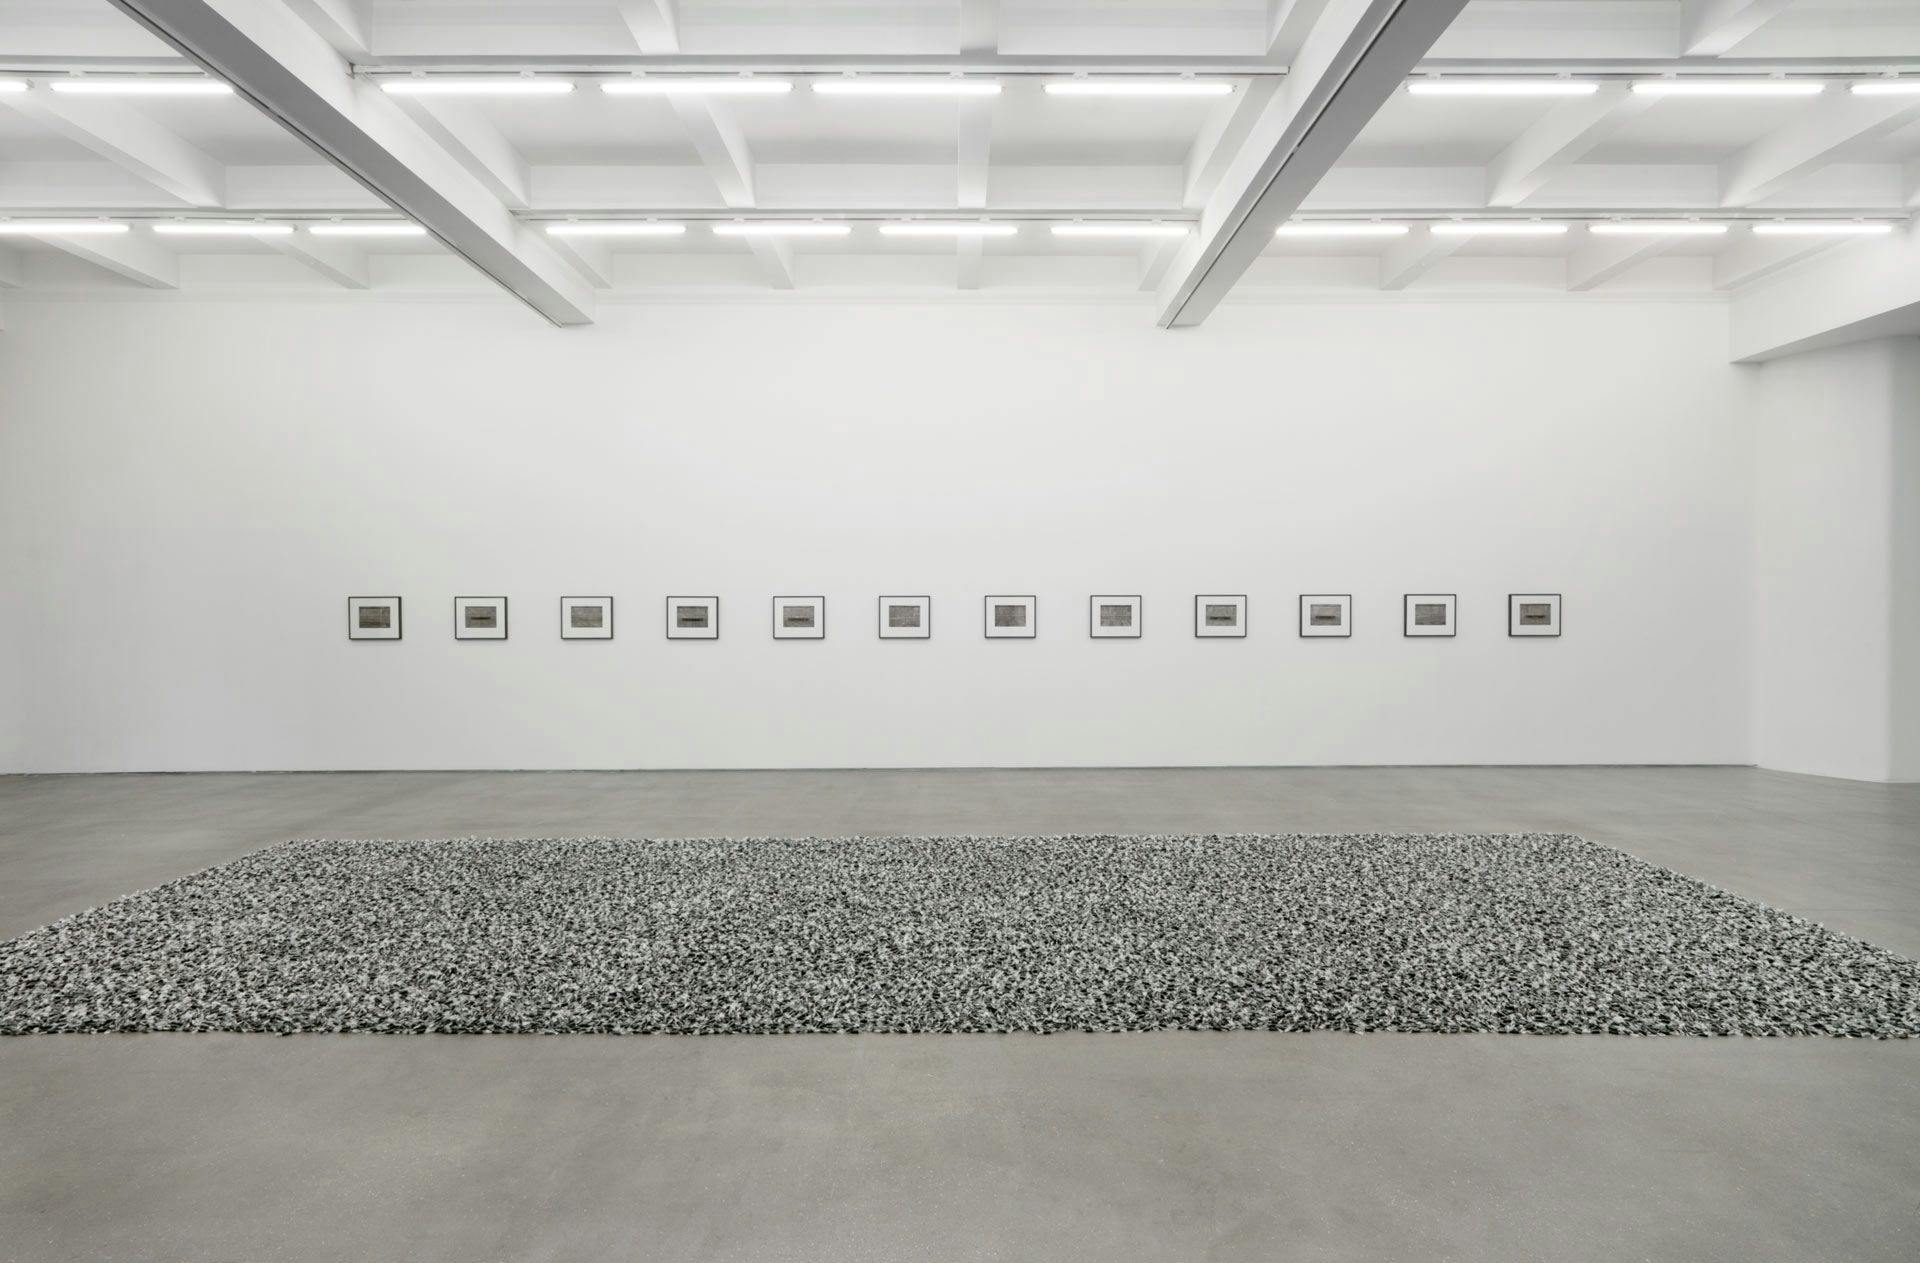 Installation view of the exhibition, Felix Gonzalez-Torres at the Rockbund Art Museum in Shanghai, dated 2016.